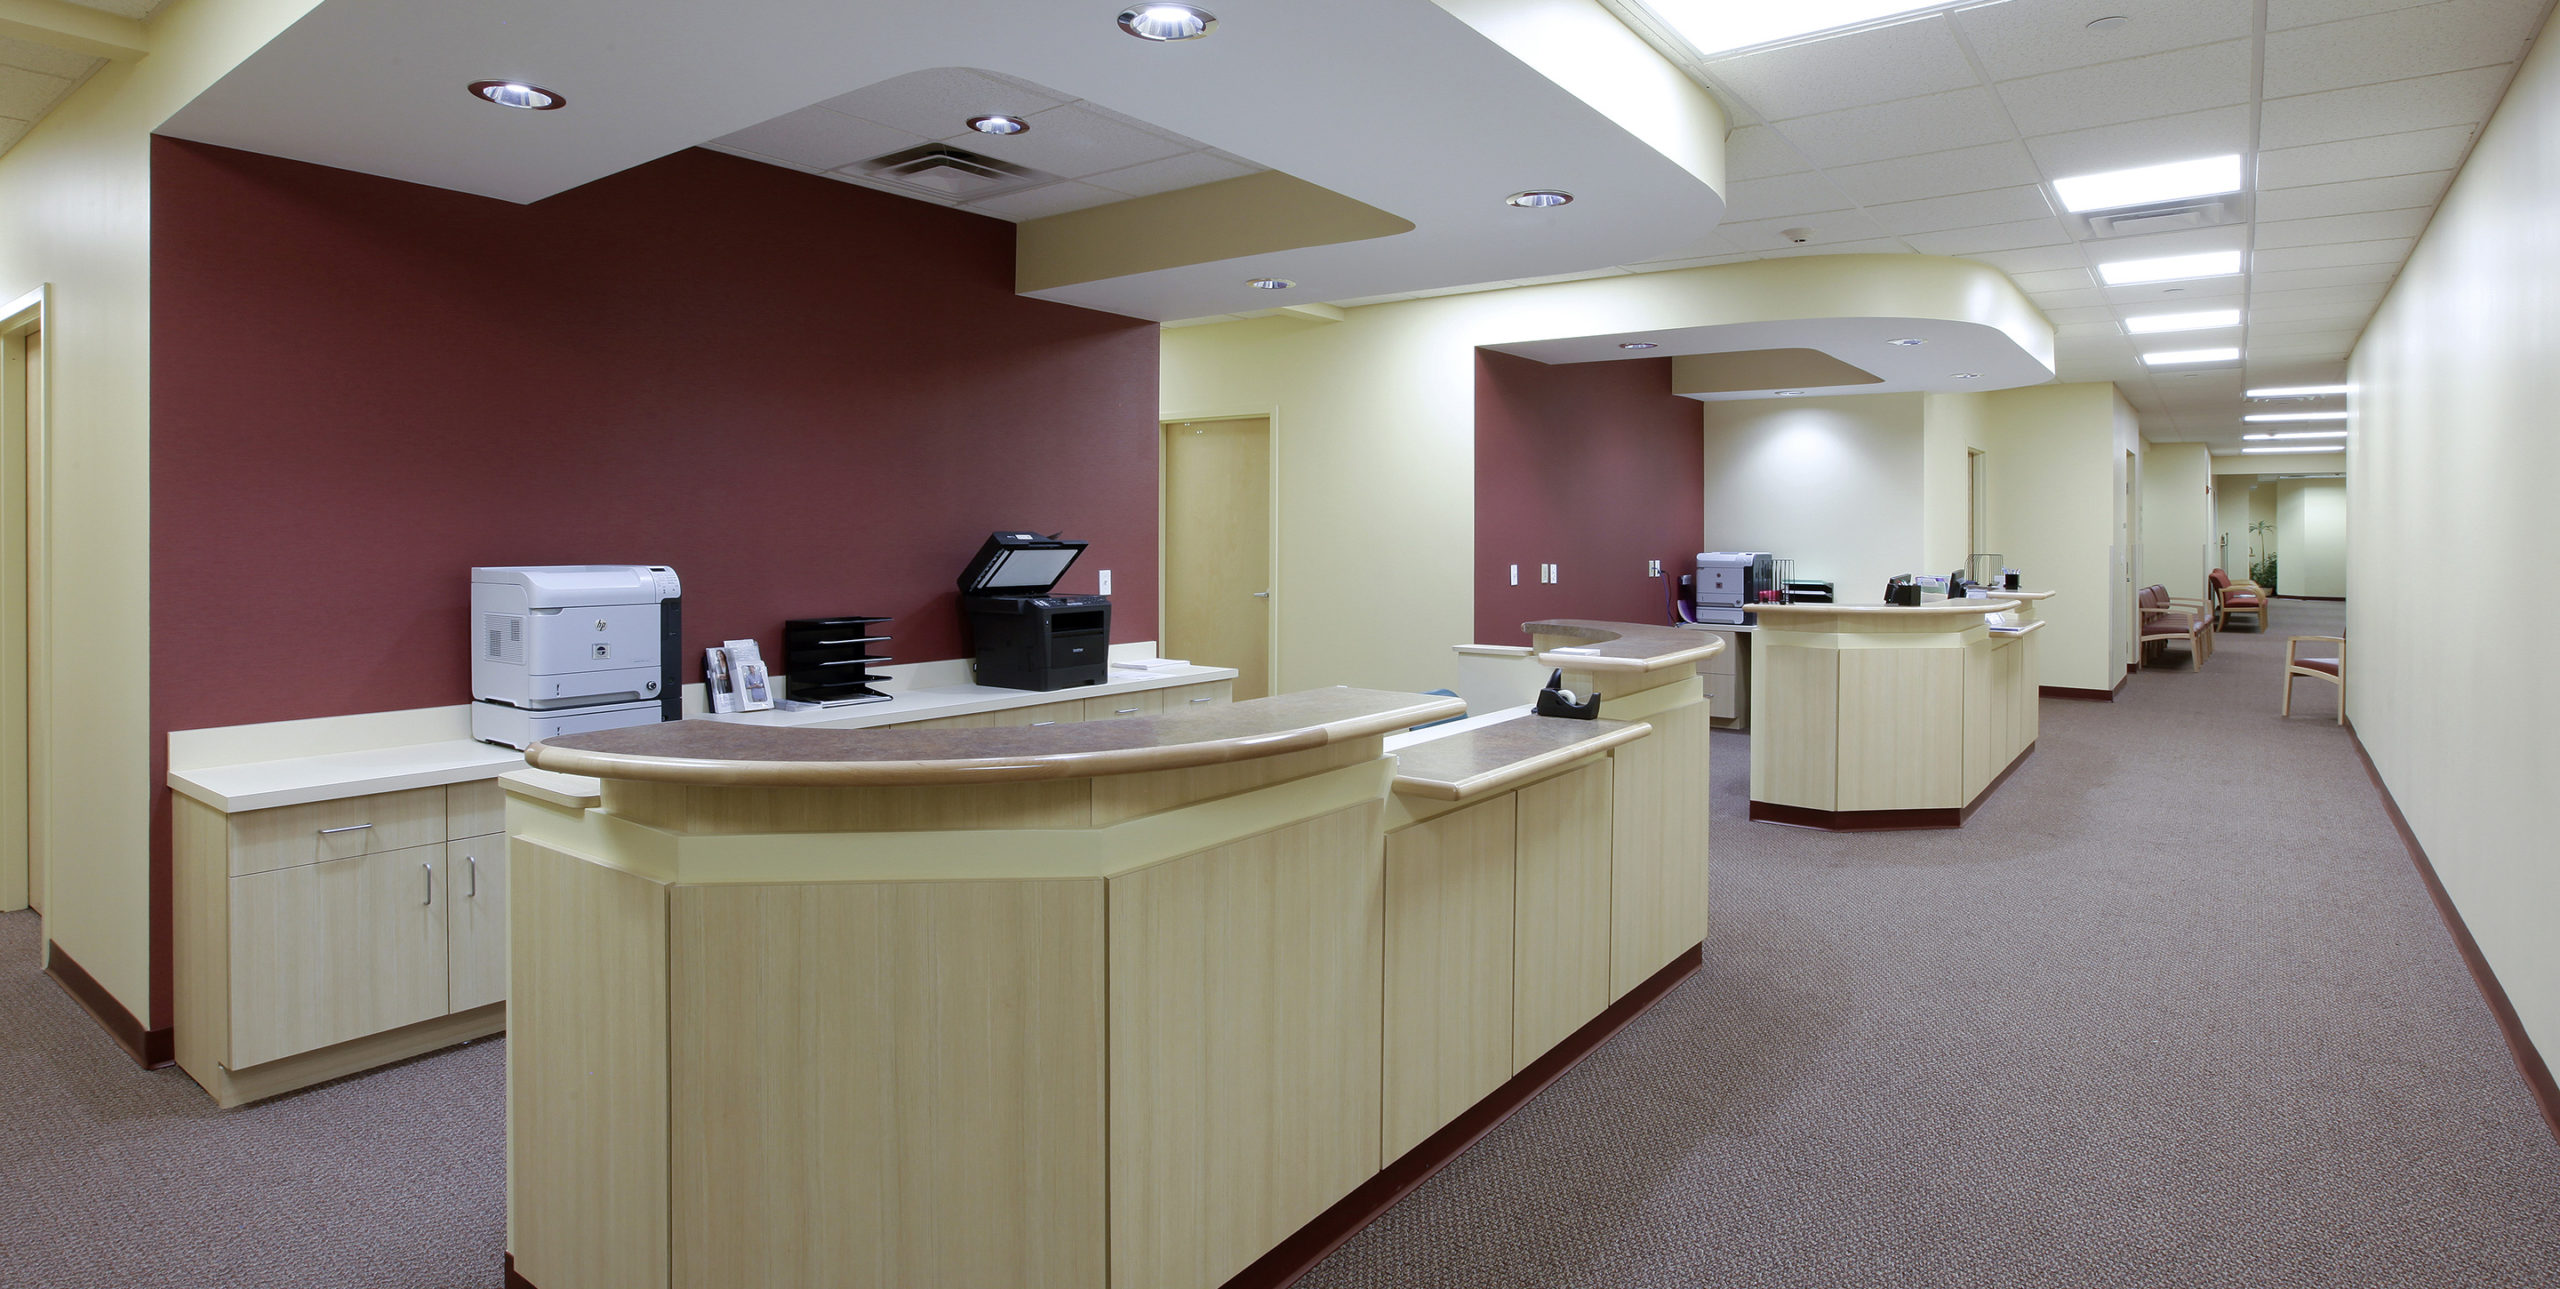 Two receptionist desks at Orthopedic Associates of Long Island in East Setauket